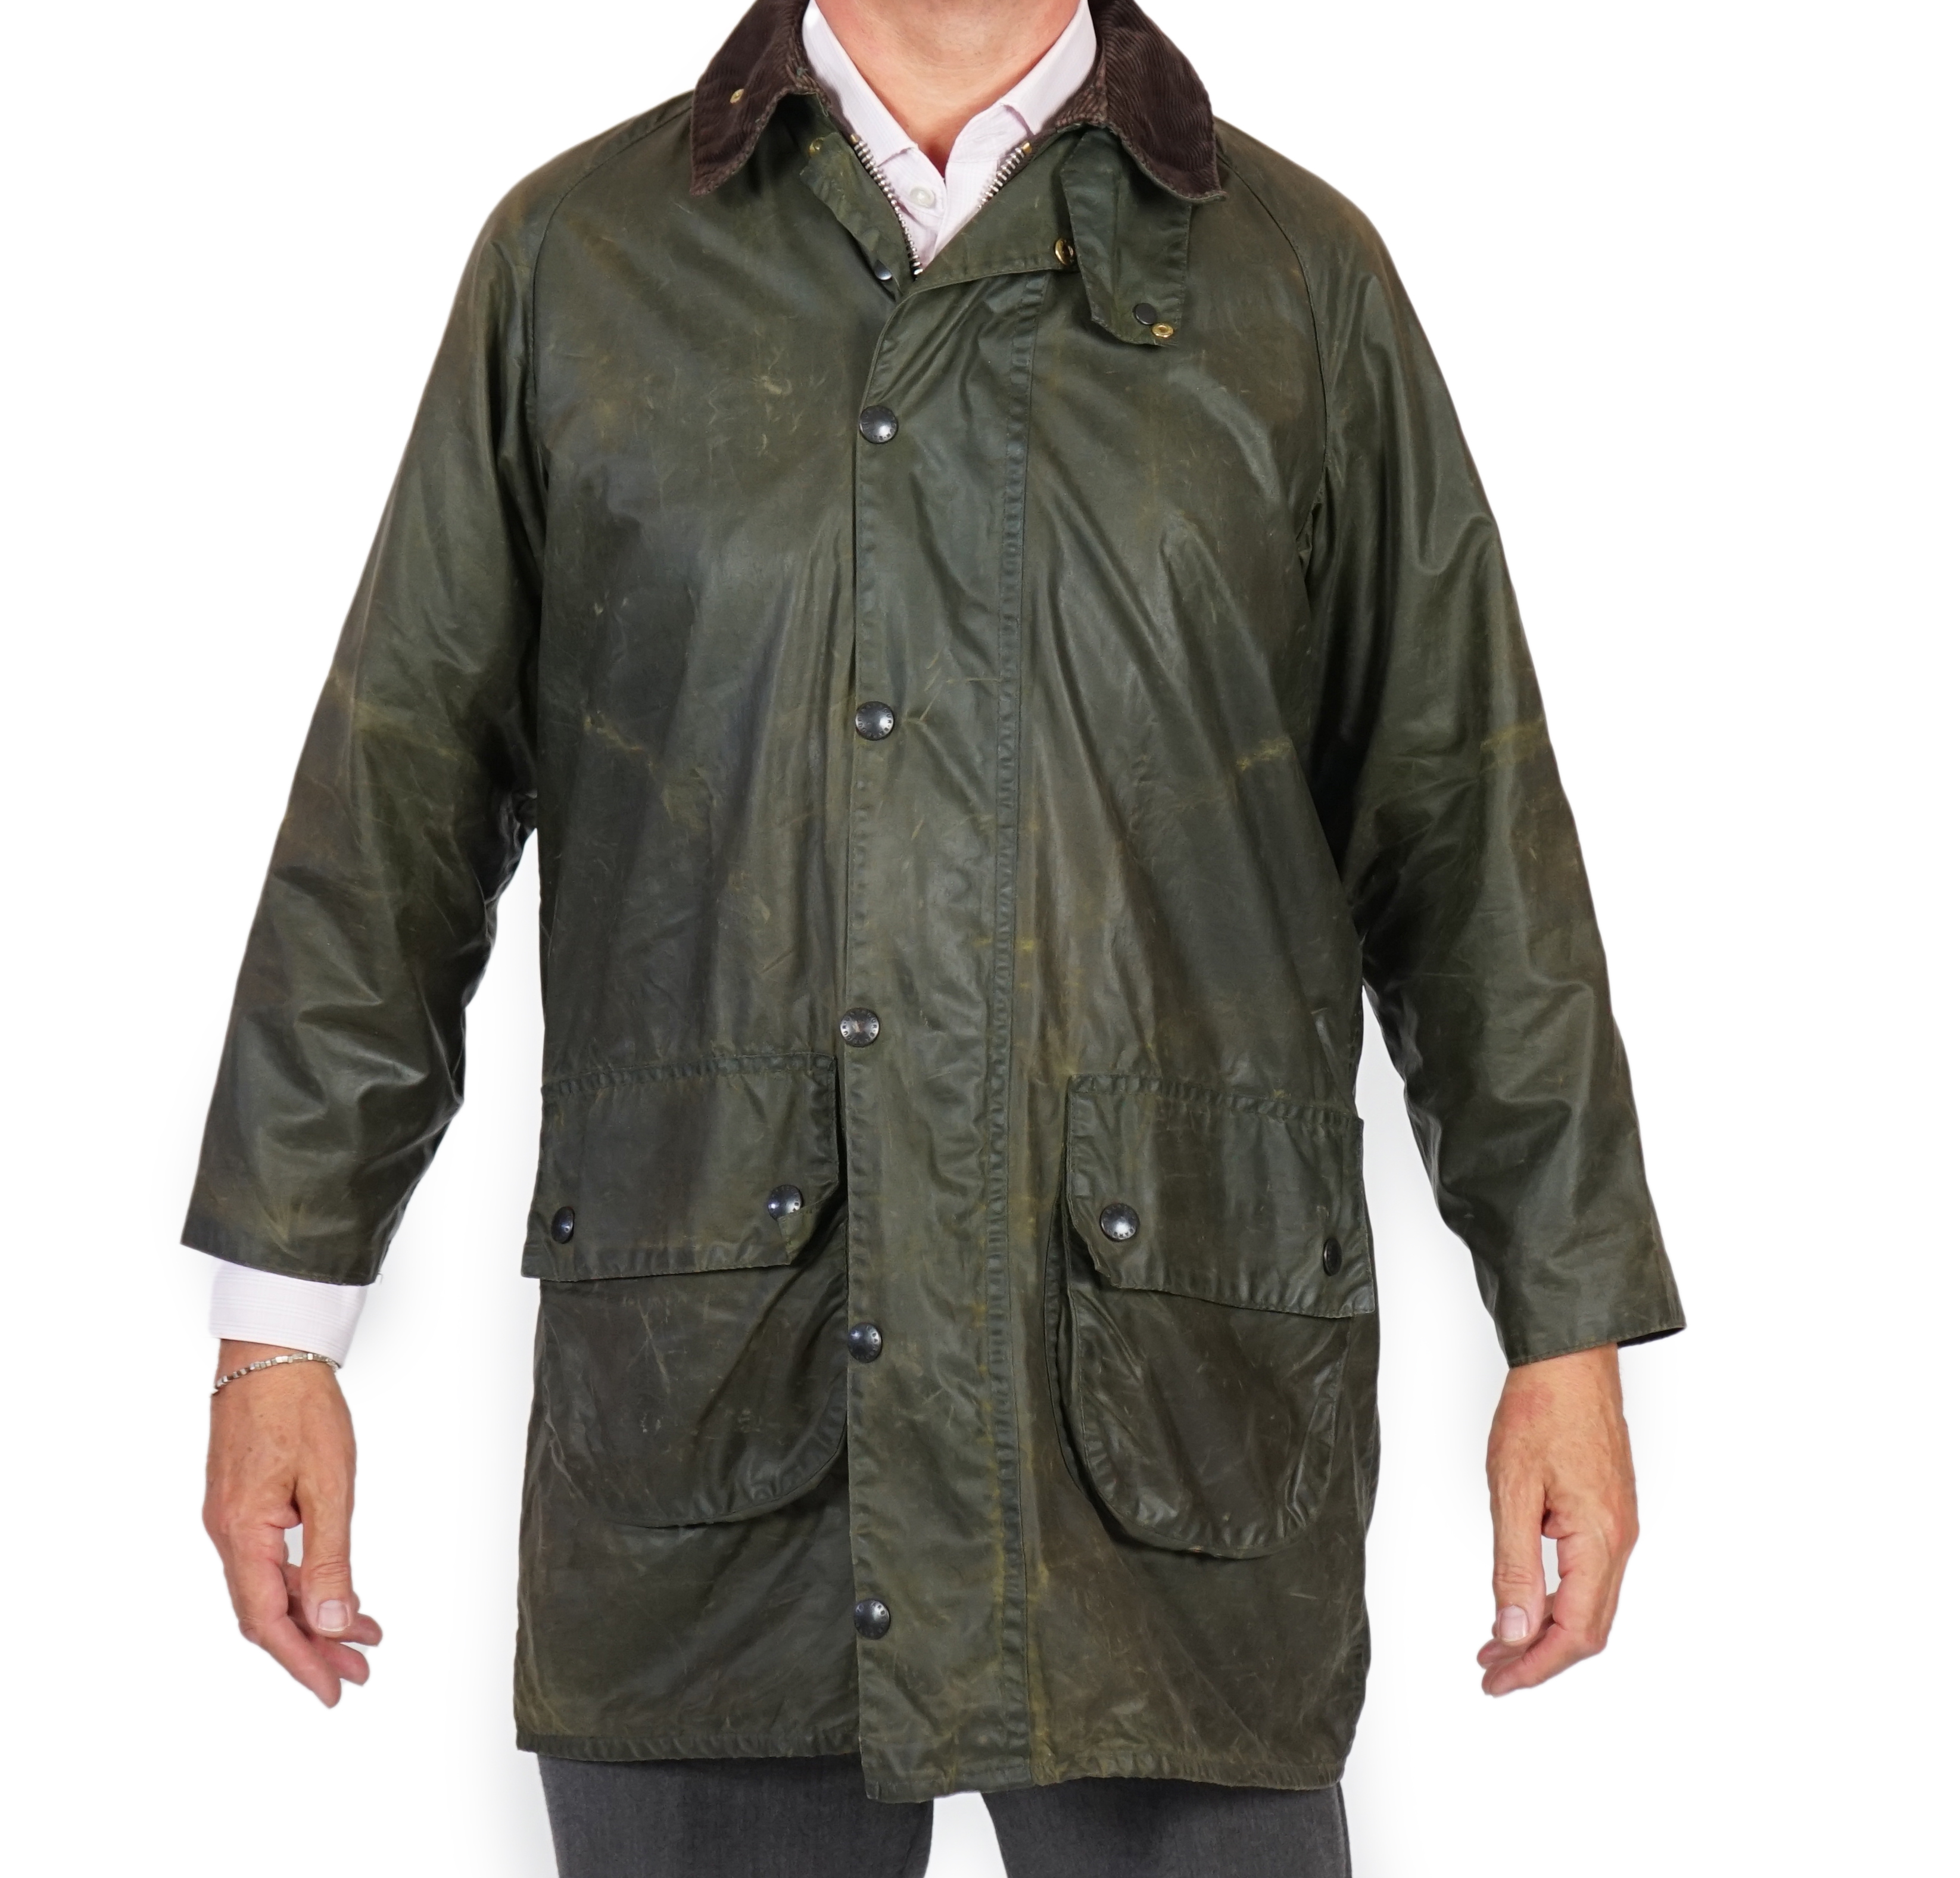 A green 1990's Barbour Gamefair jacket